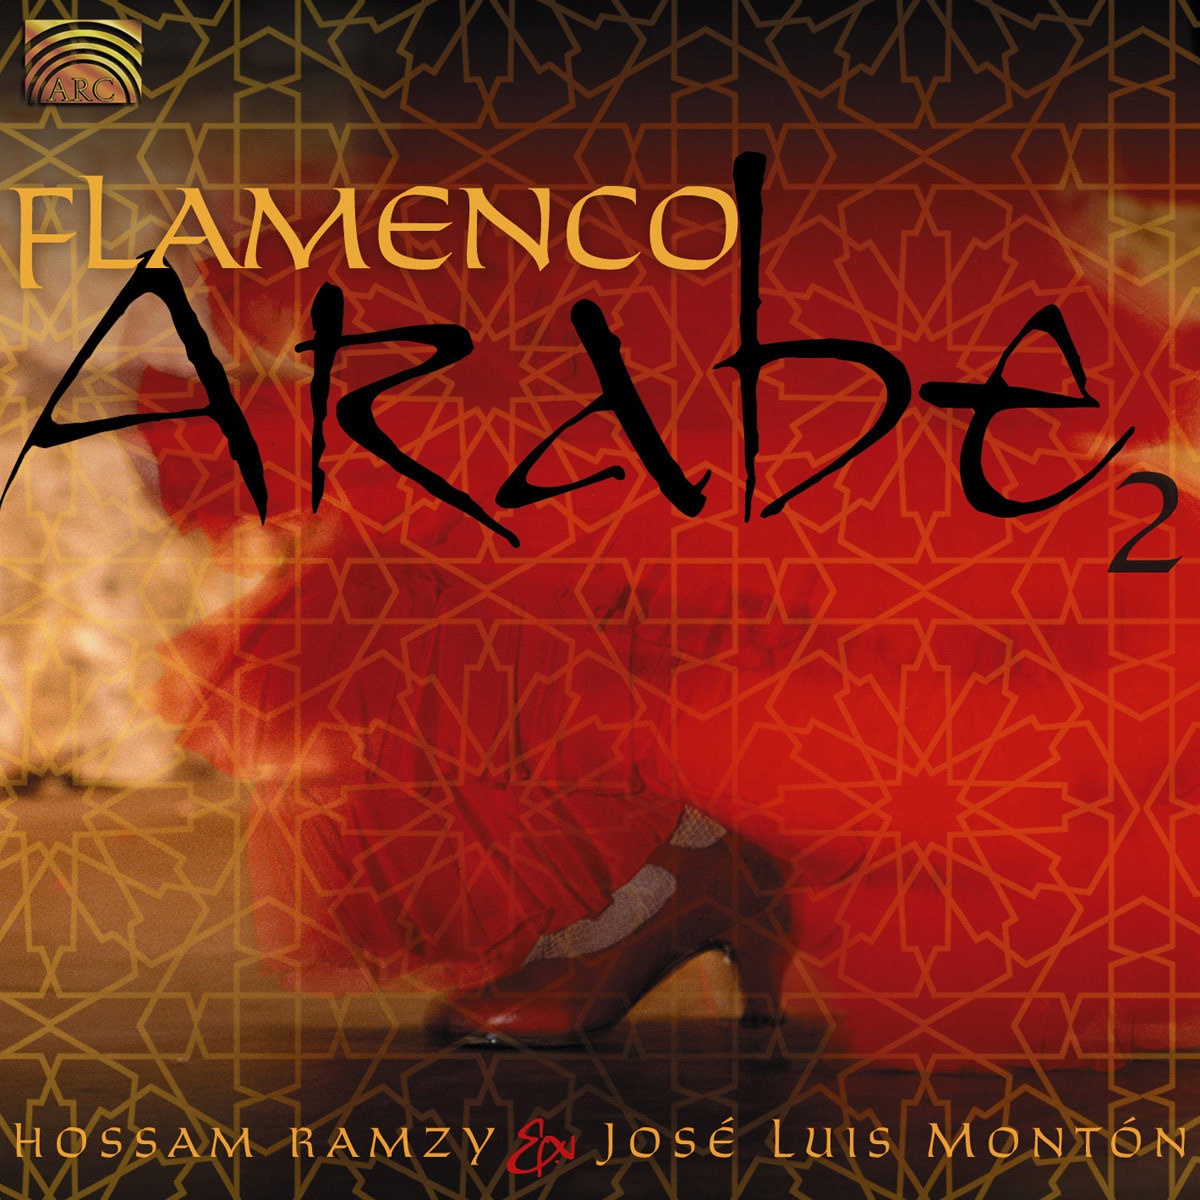 Flamenco Arabe 2 - Hossam Ramzy & Monton Jose Lui. (CD)